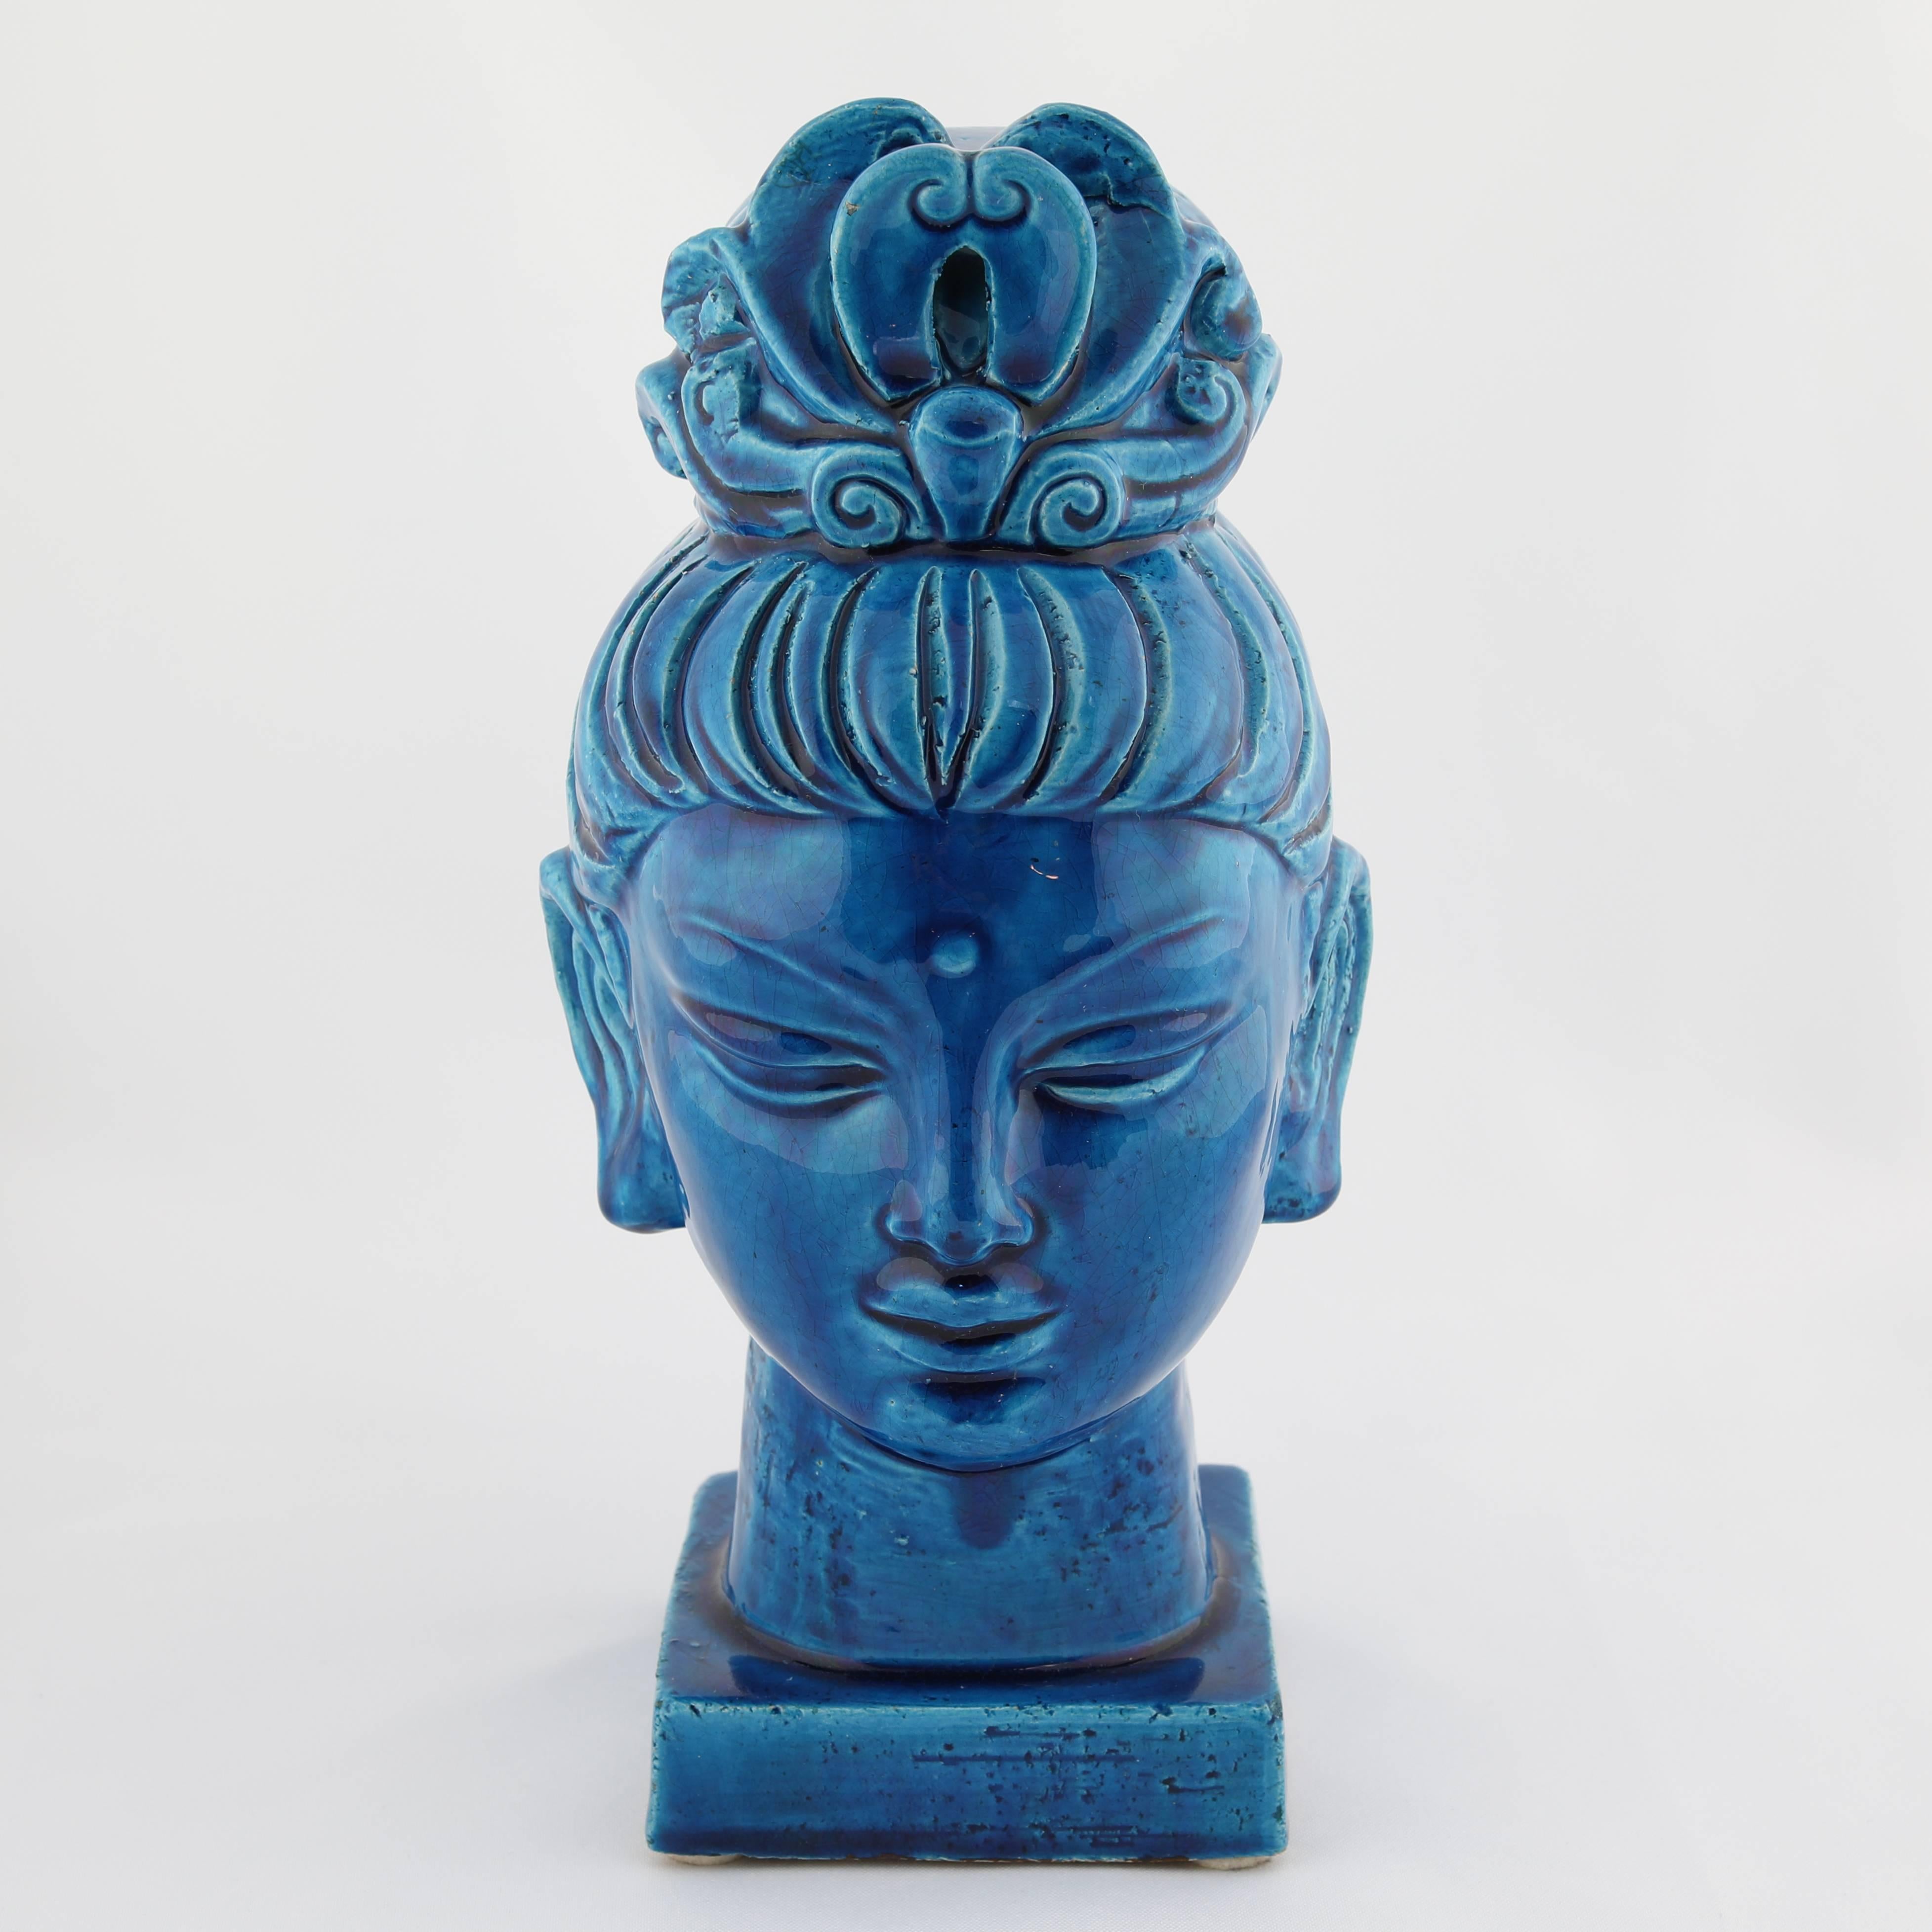 Blue ceramic Guan Yin bust from Aldo Londi's iconic 